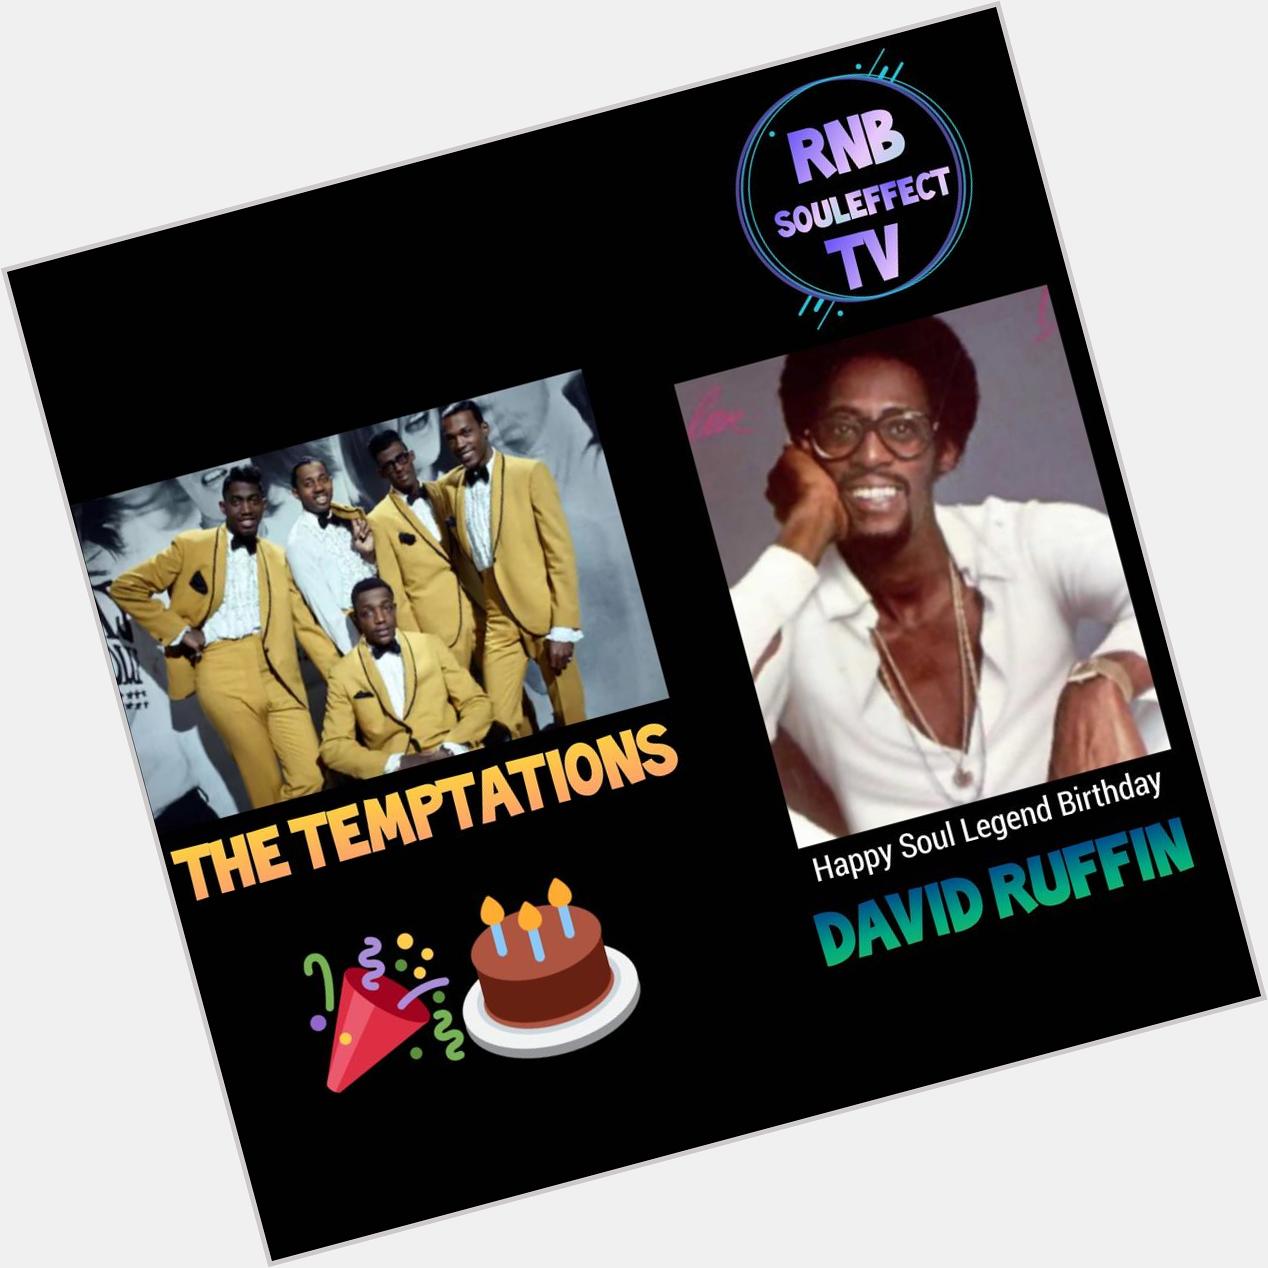 Happy Soul Legend Birthday
David Ruffin      